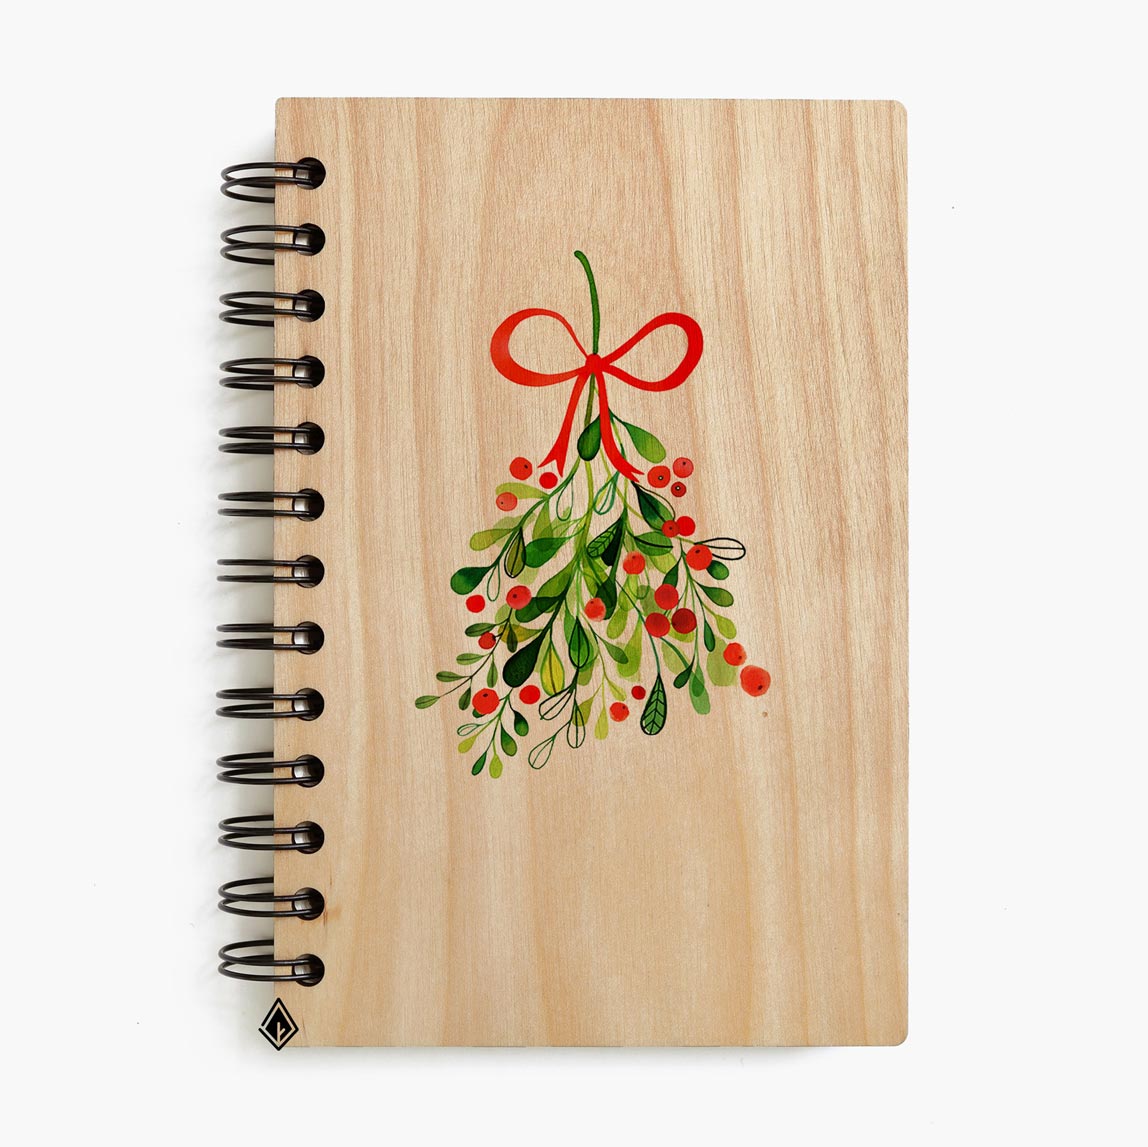 Mistletoe maple wooden notebook